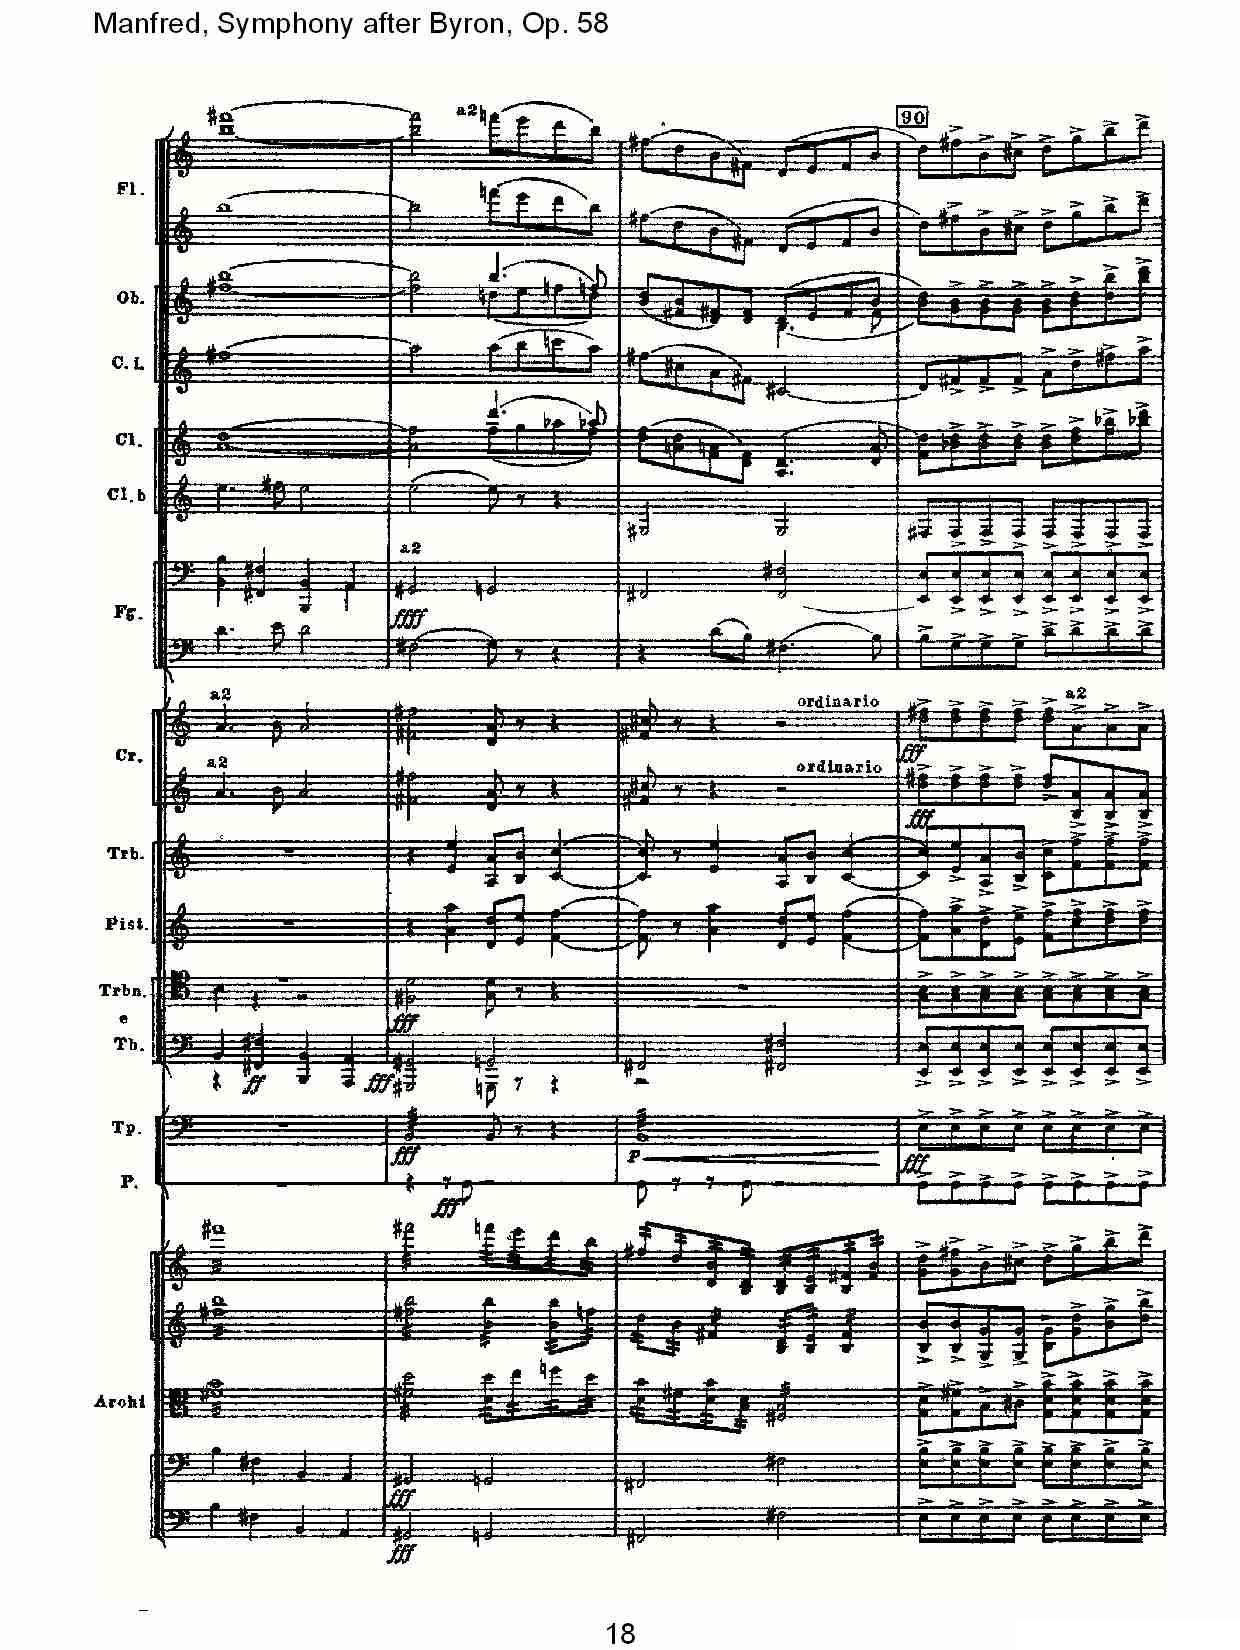 Manfred, Symphony after Byron, Op.58第一乐章（一）其它曲谱（图18）